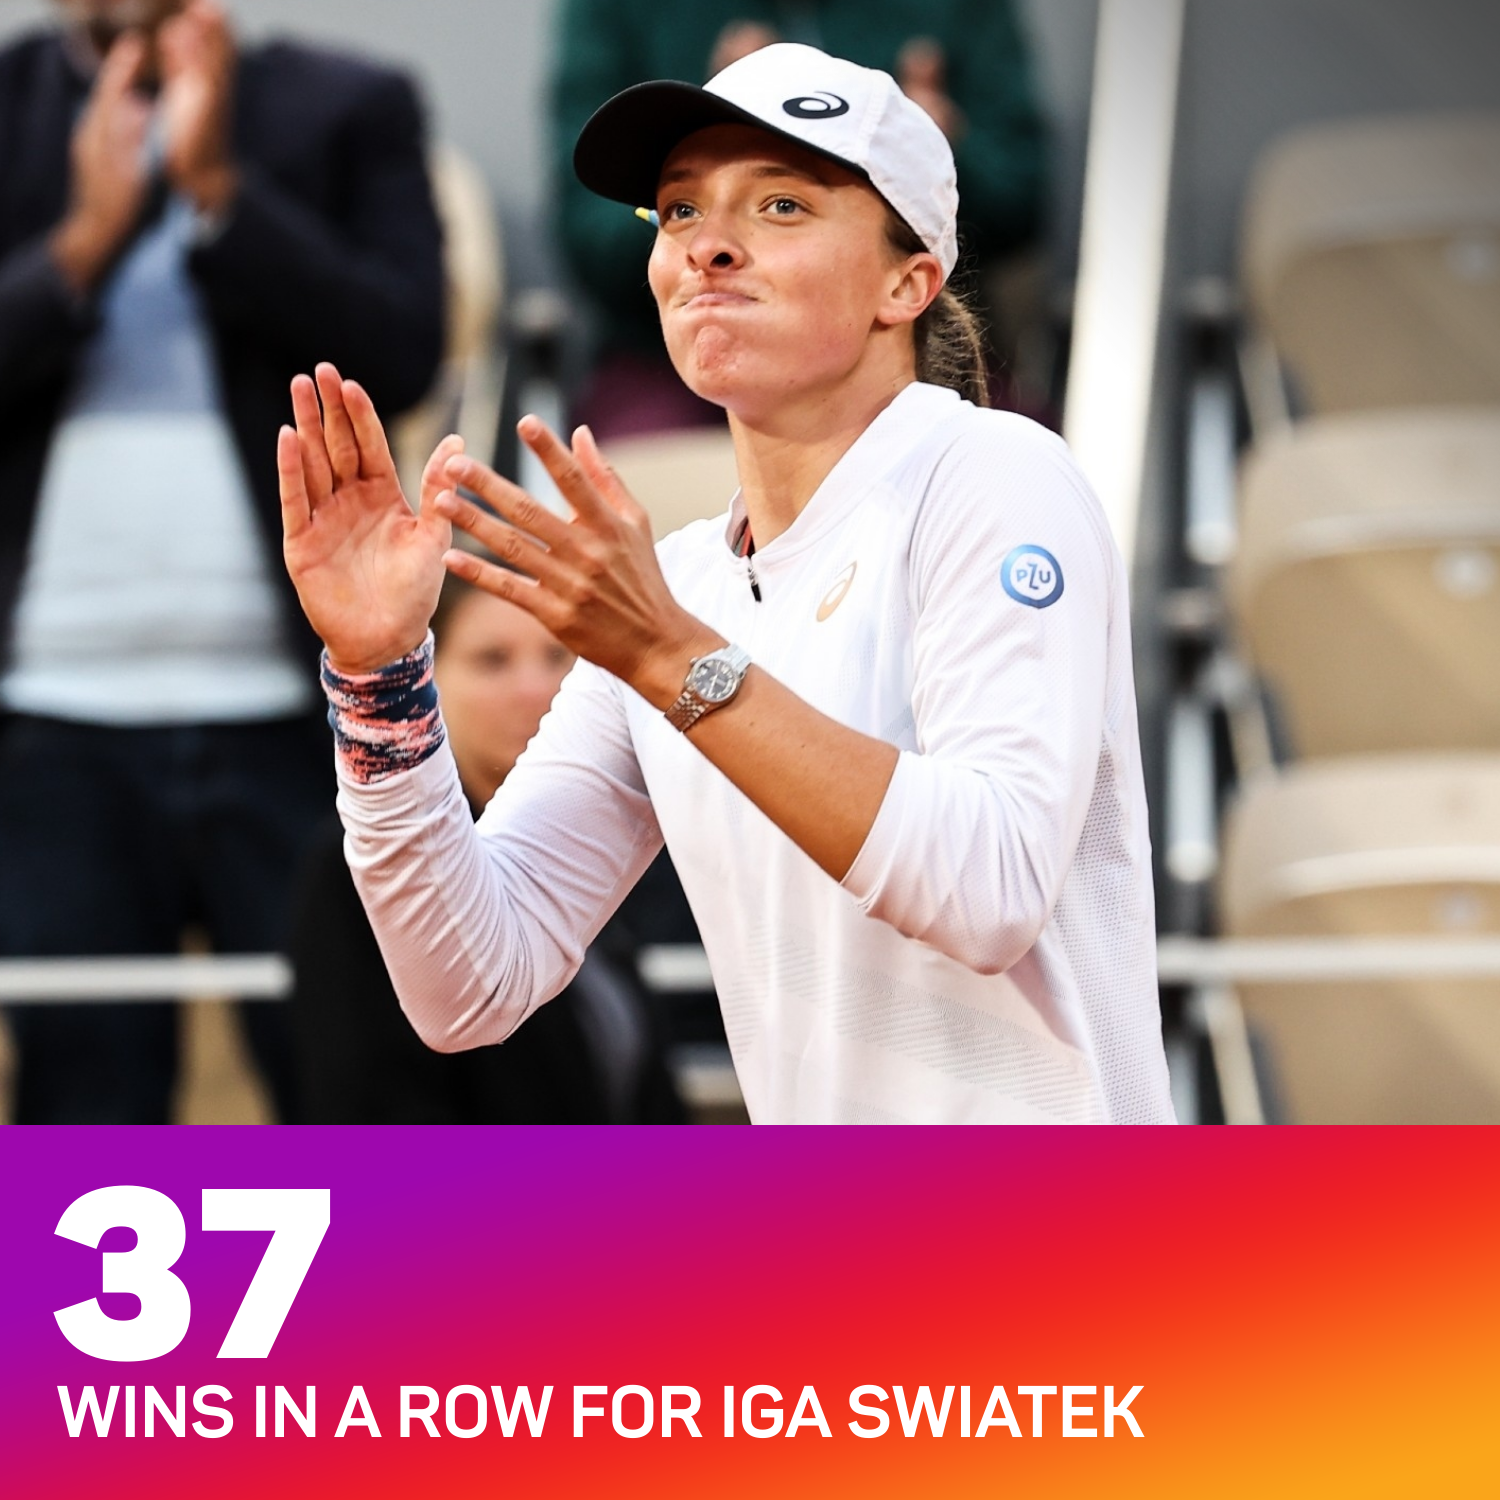 Iga Swiatek has won 37 matches in a row